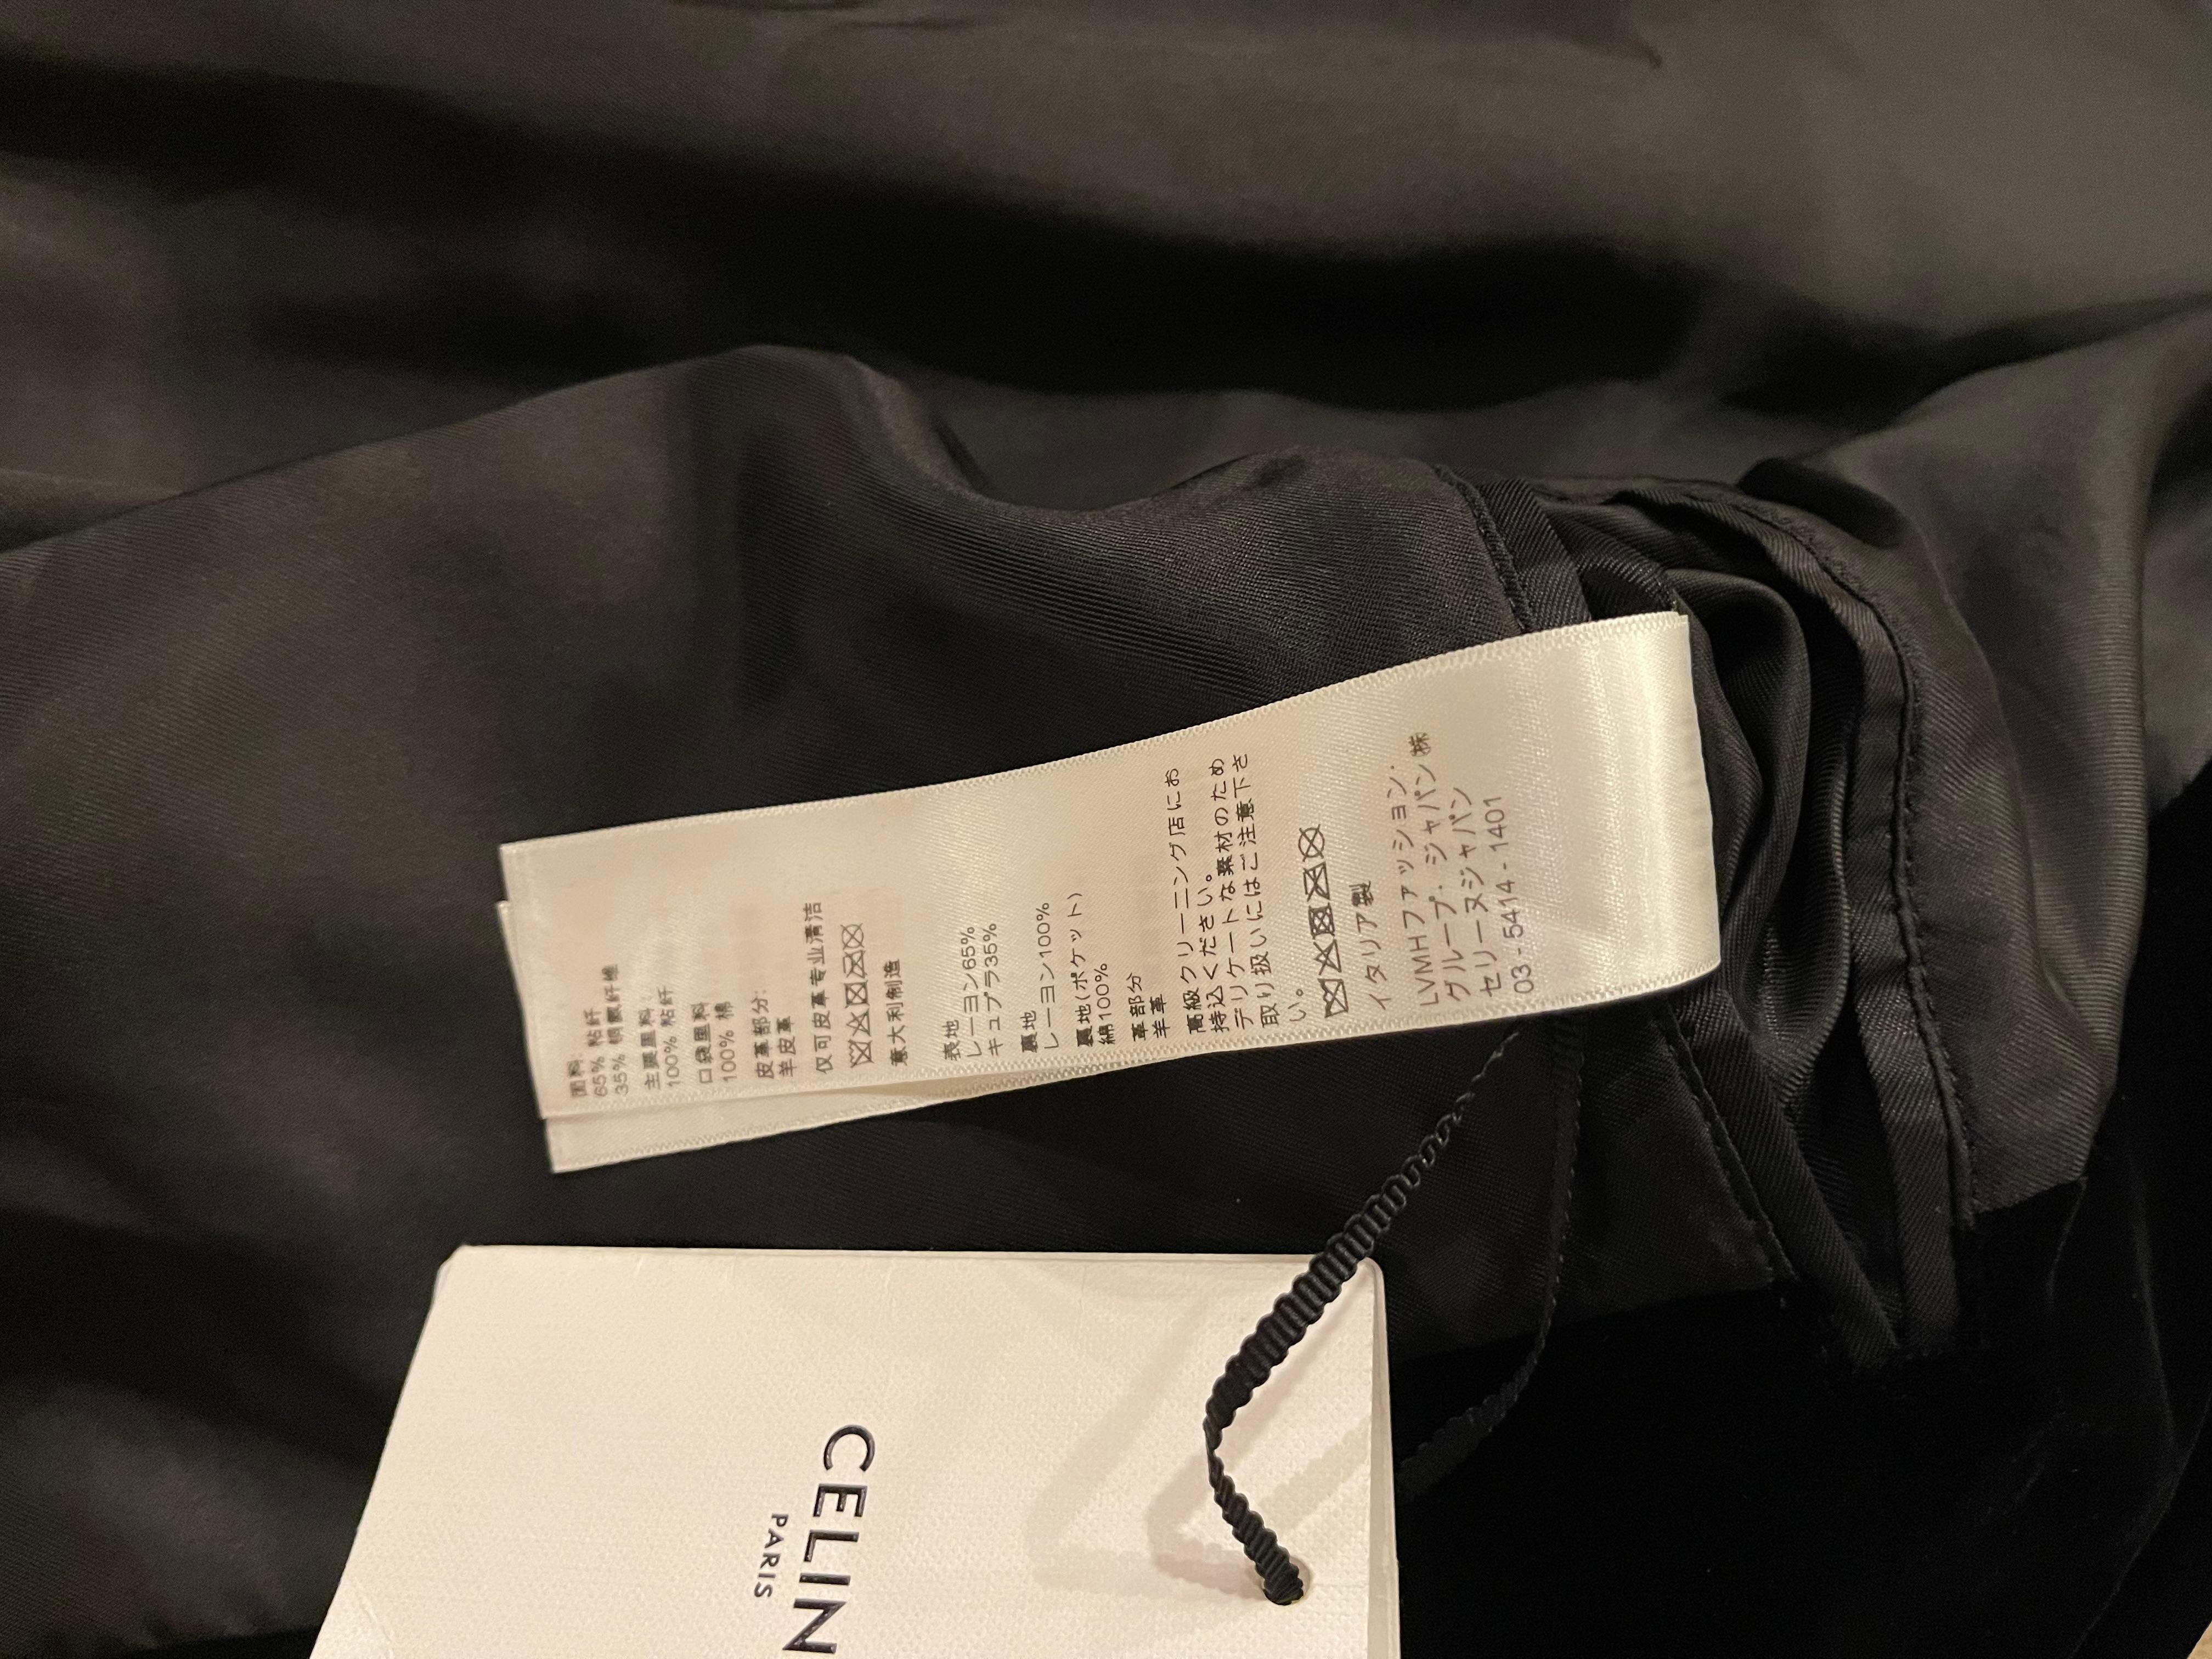 Celine Hedi Slimane Black Velvet Teddy Varsity Jacket RARE size 48 13